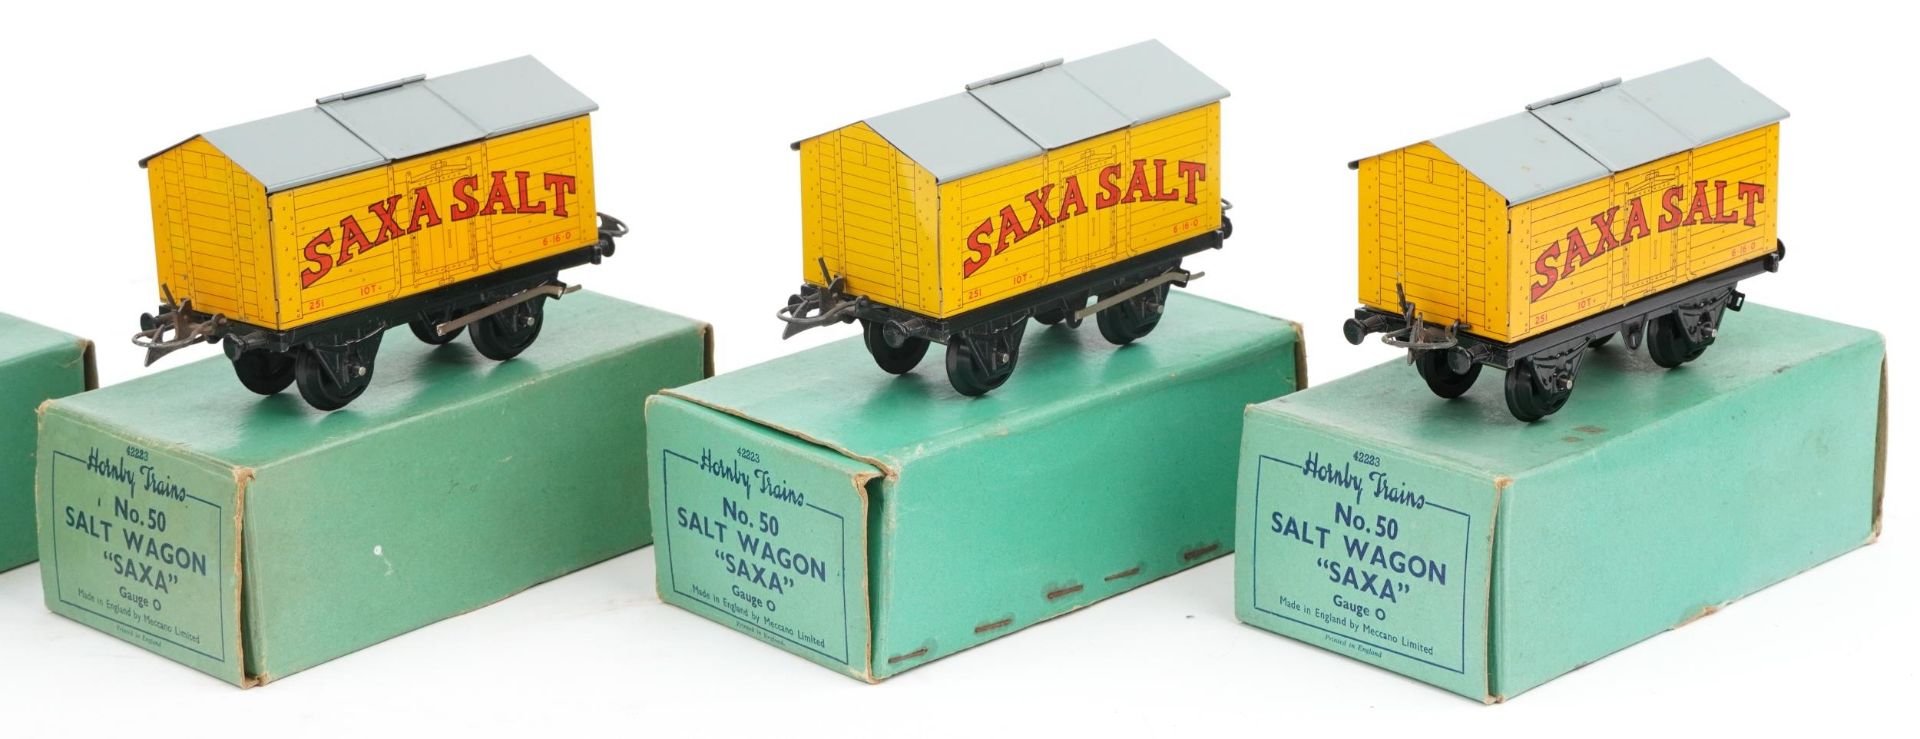 Six Hornby O gauge tinplate model railway no 50 Saxa salt wagons with boxes - Image 3 of 5